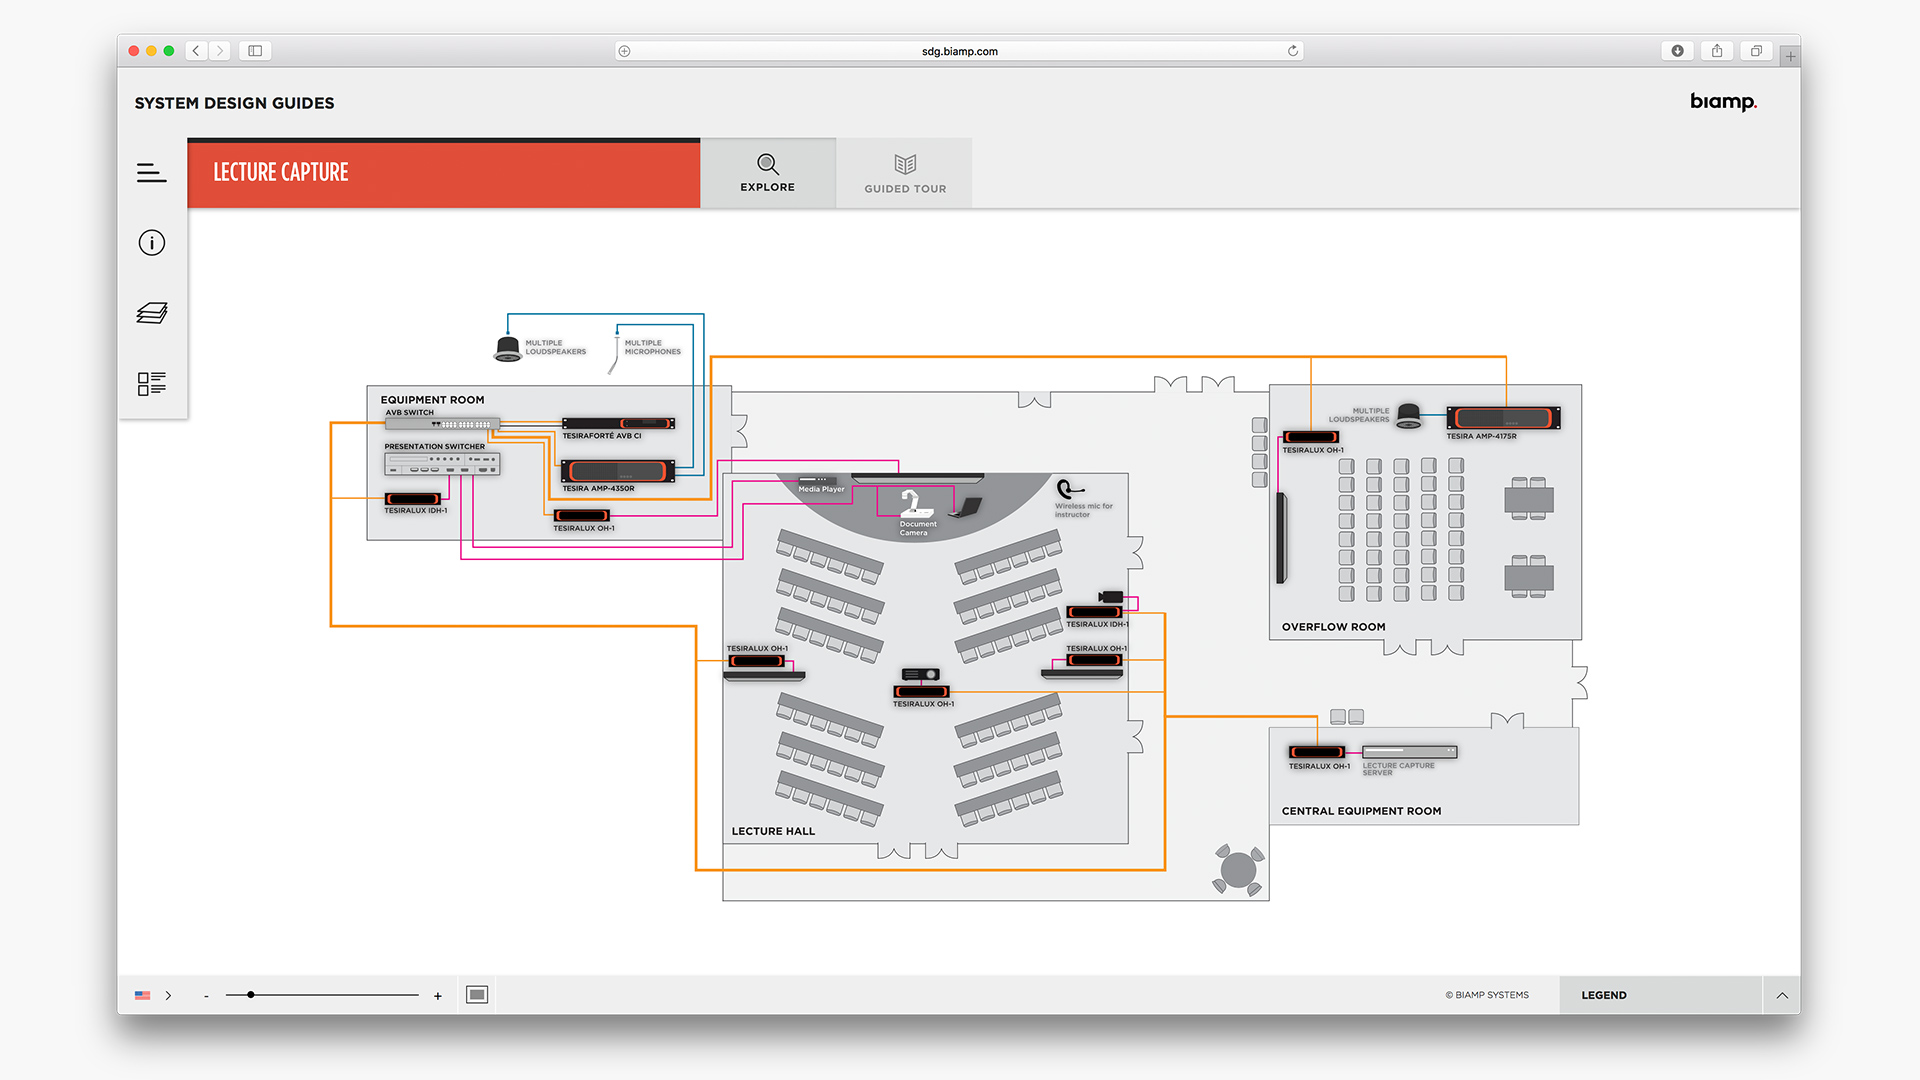 Screenshot of Biamp's System Design Guide Application